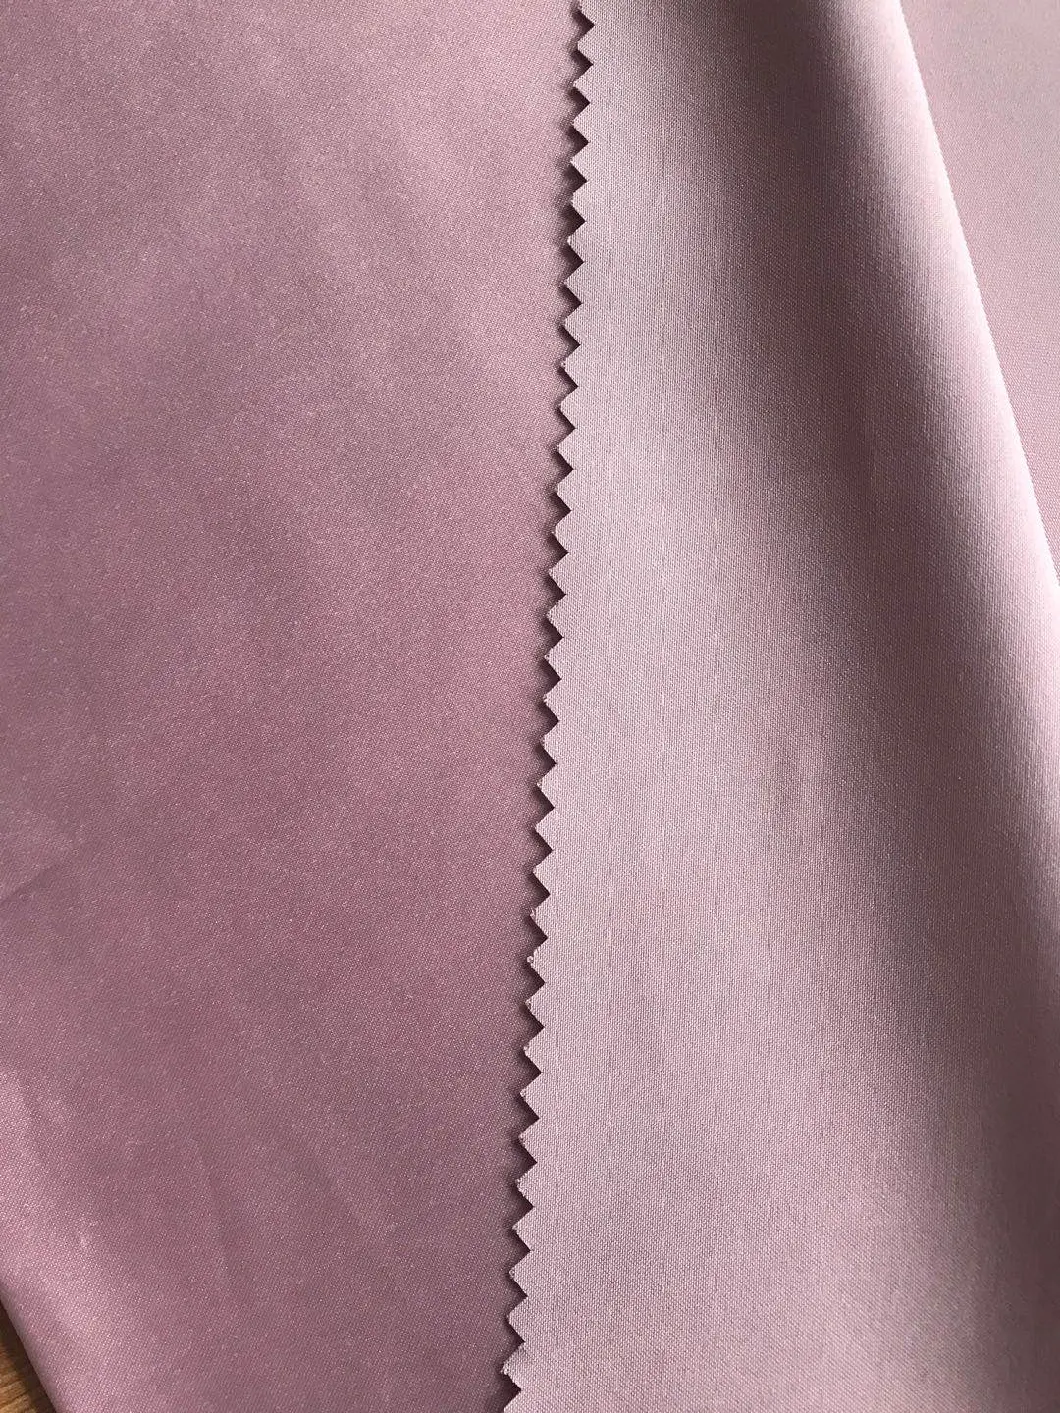 Satin Fabric Promotional Top Quality 100% Polyester Satin Fabric Microfiber Women Garment Fabric